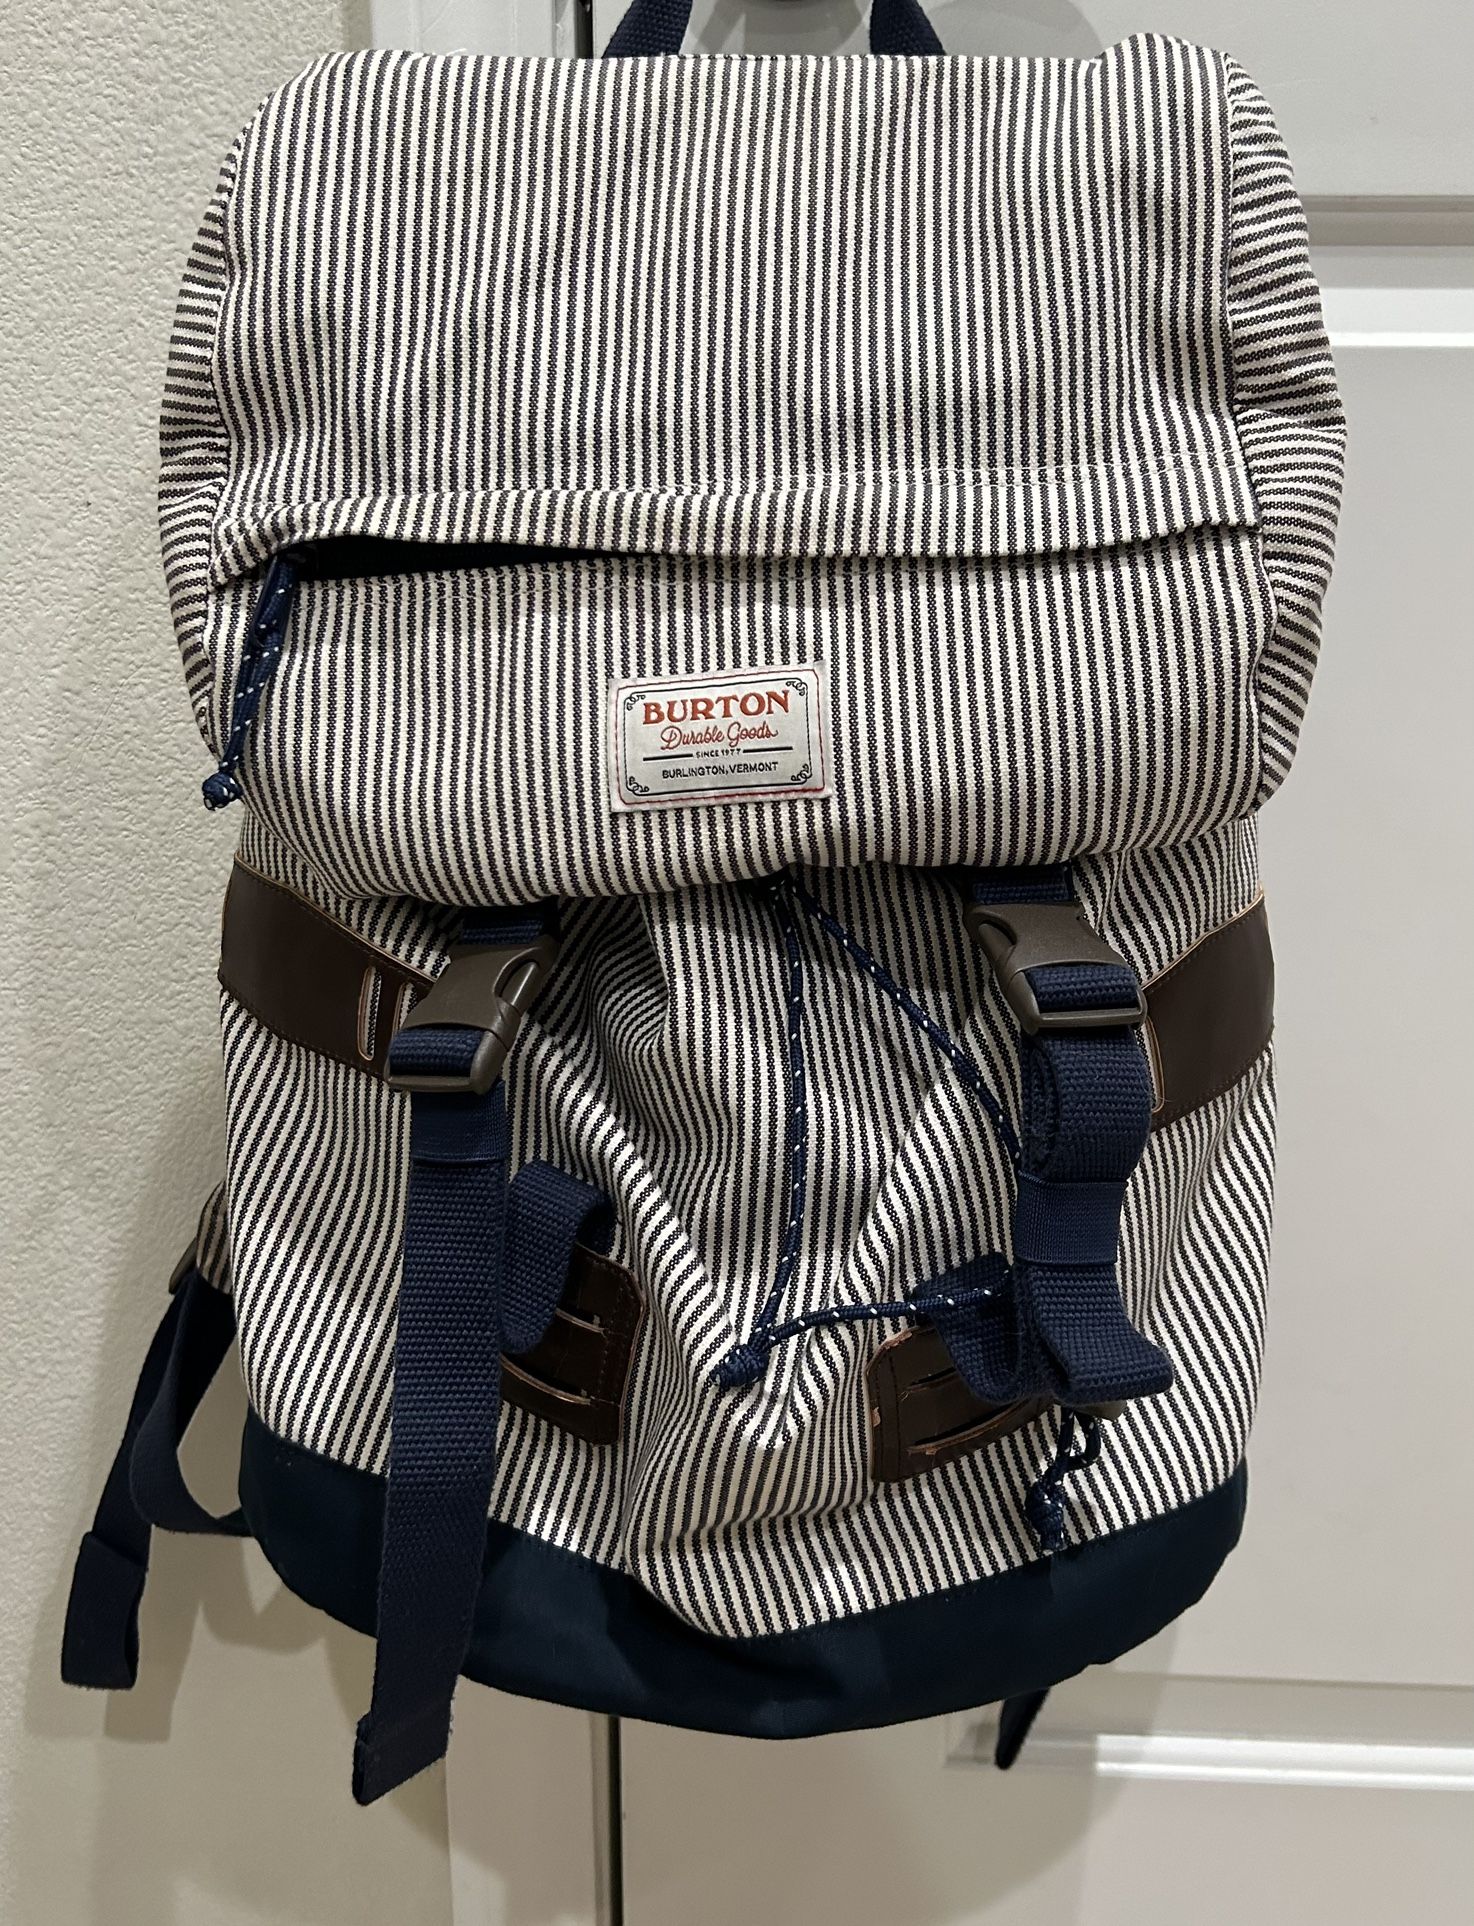 BURTON backpack